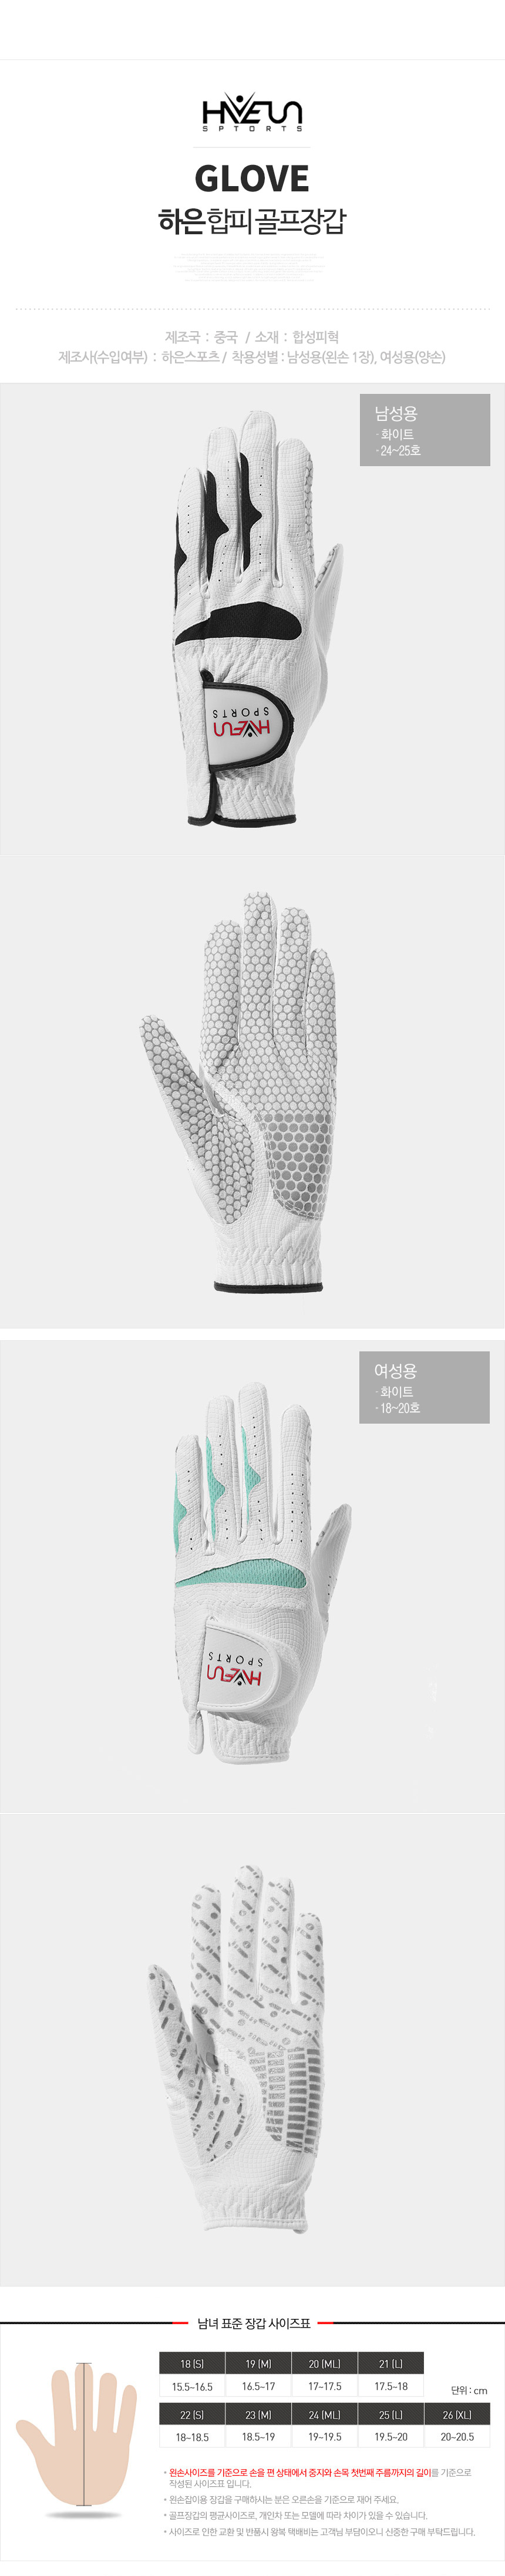 haen_synthetic_leather_glove_21.jpg